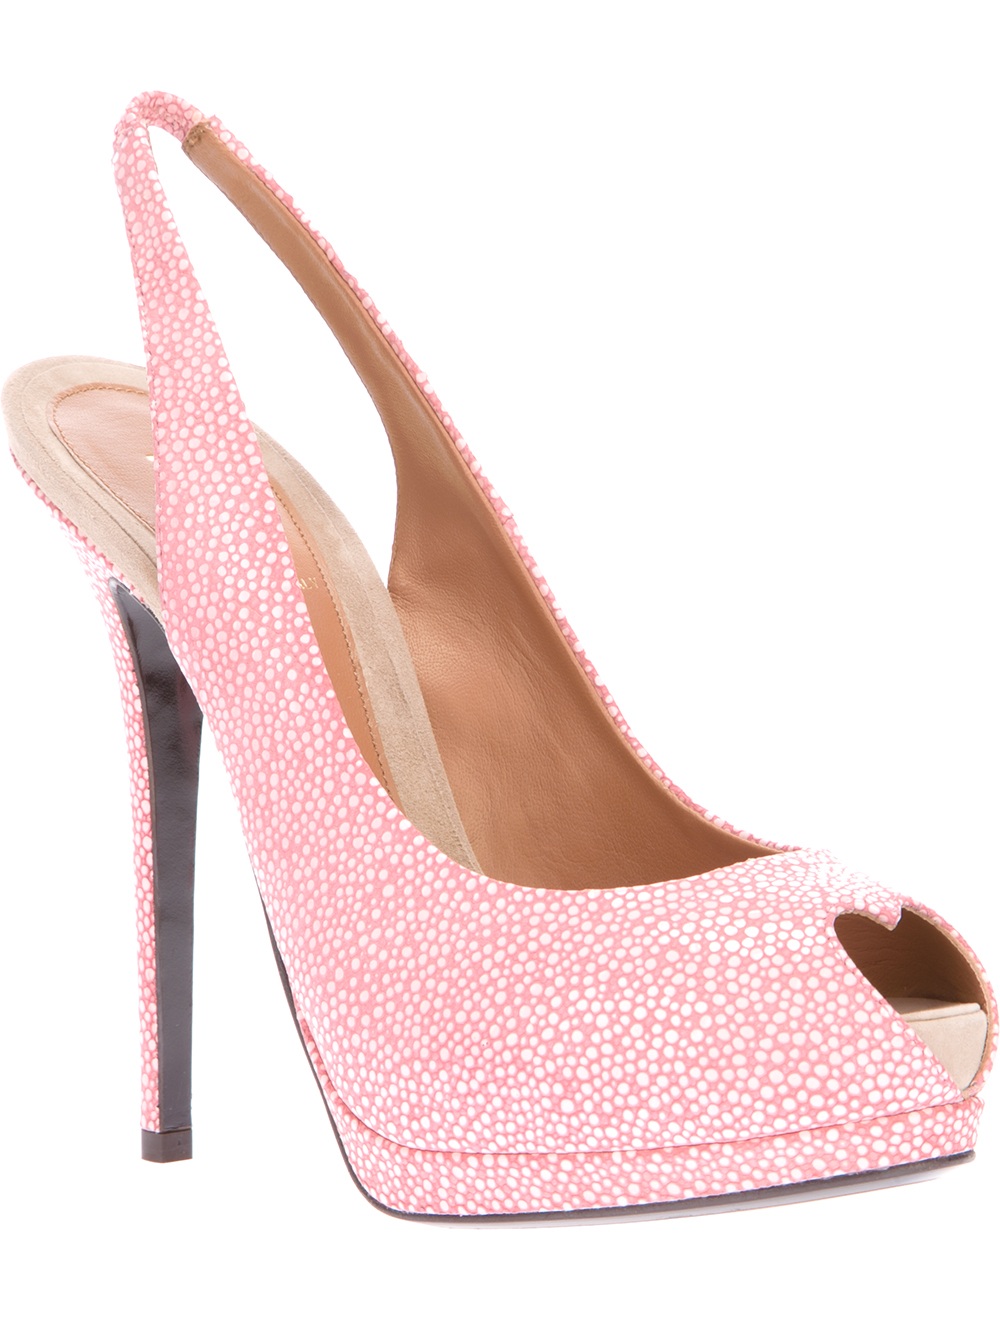 Shoeniverse: FENDI Pink Heart Peep Toe Pump